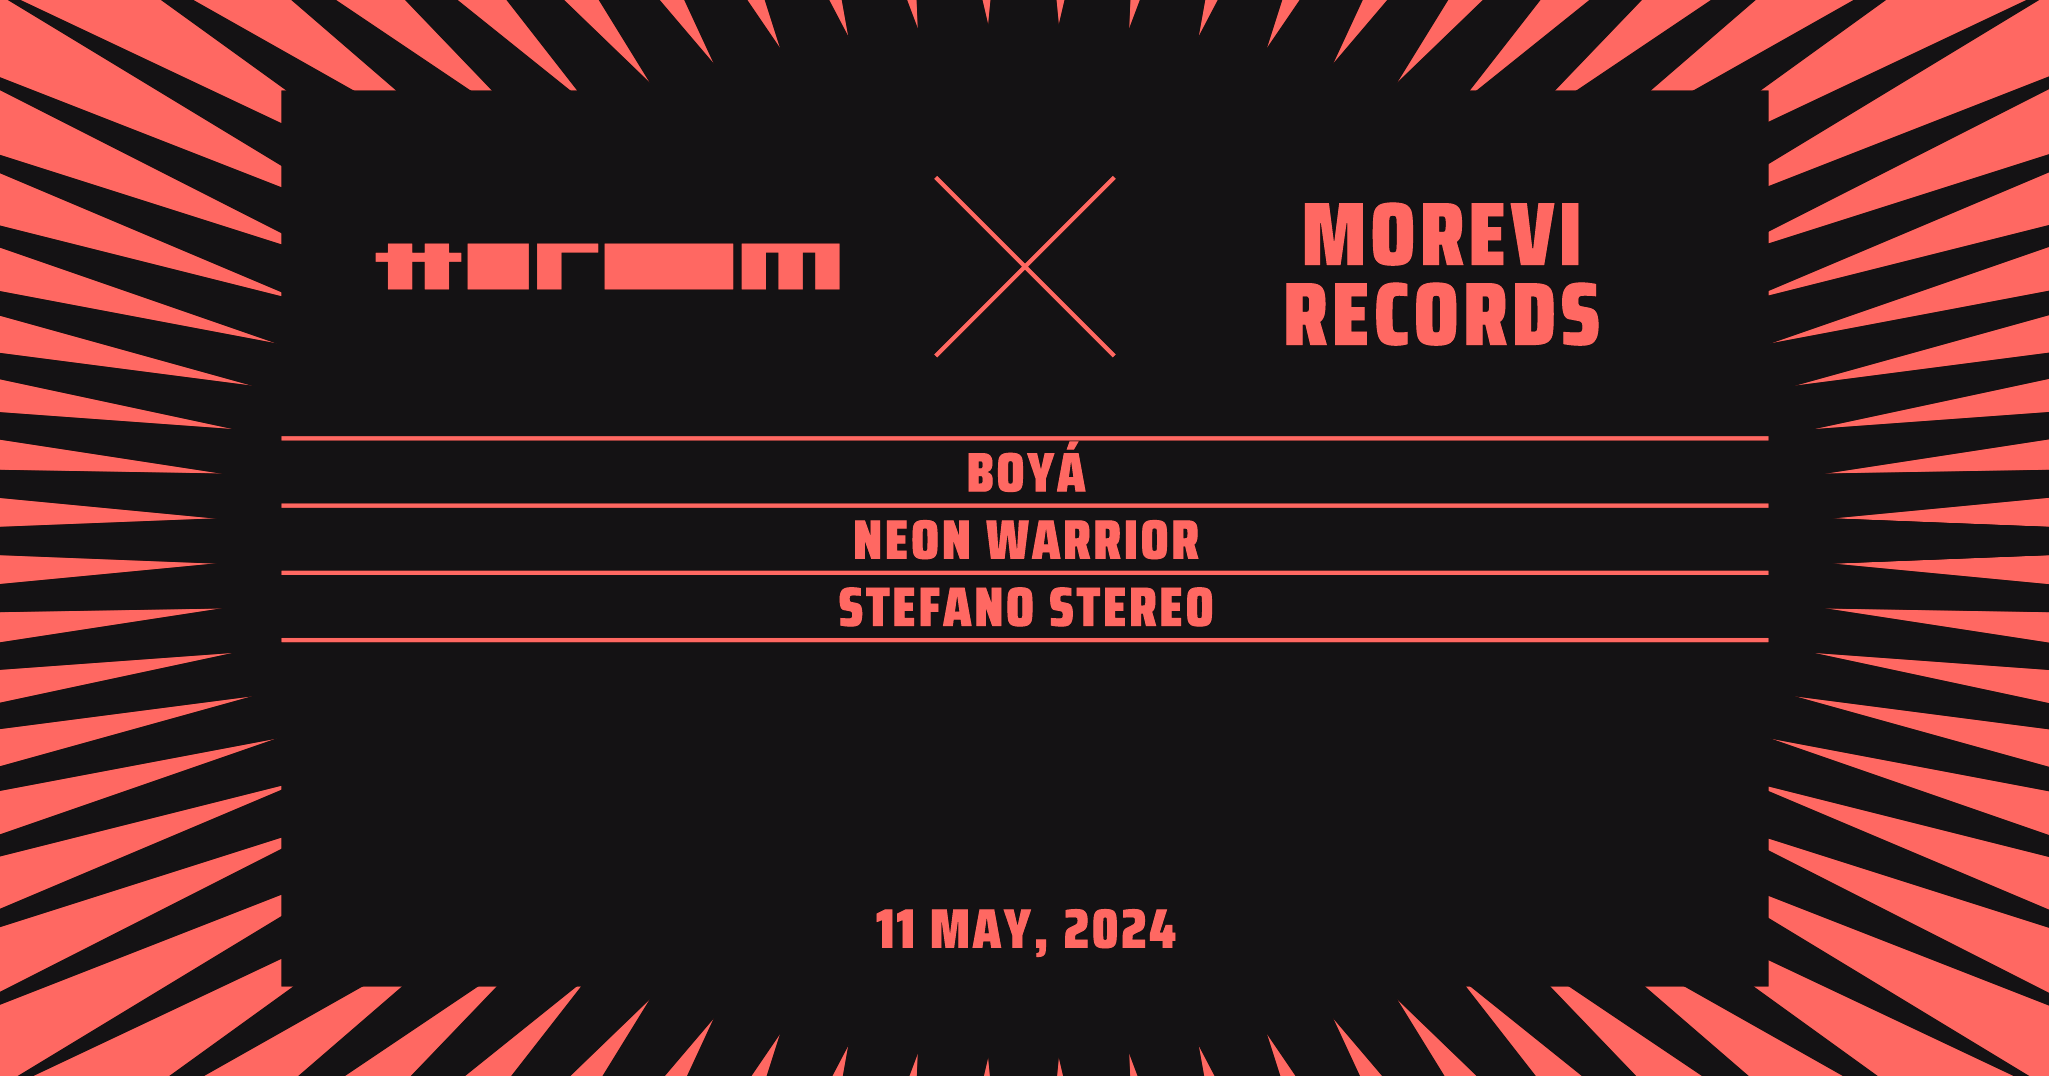 Morevi Records: Boya, Neon Warrior, Stefano Stereo - フライヤー表